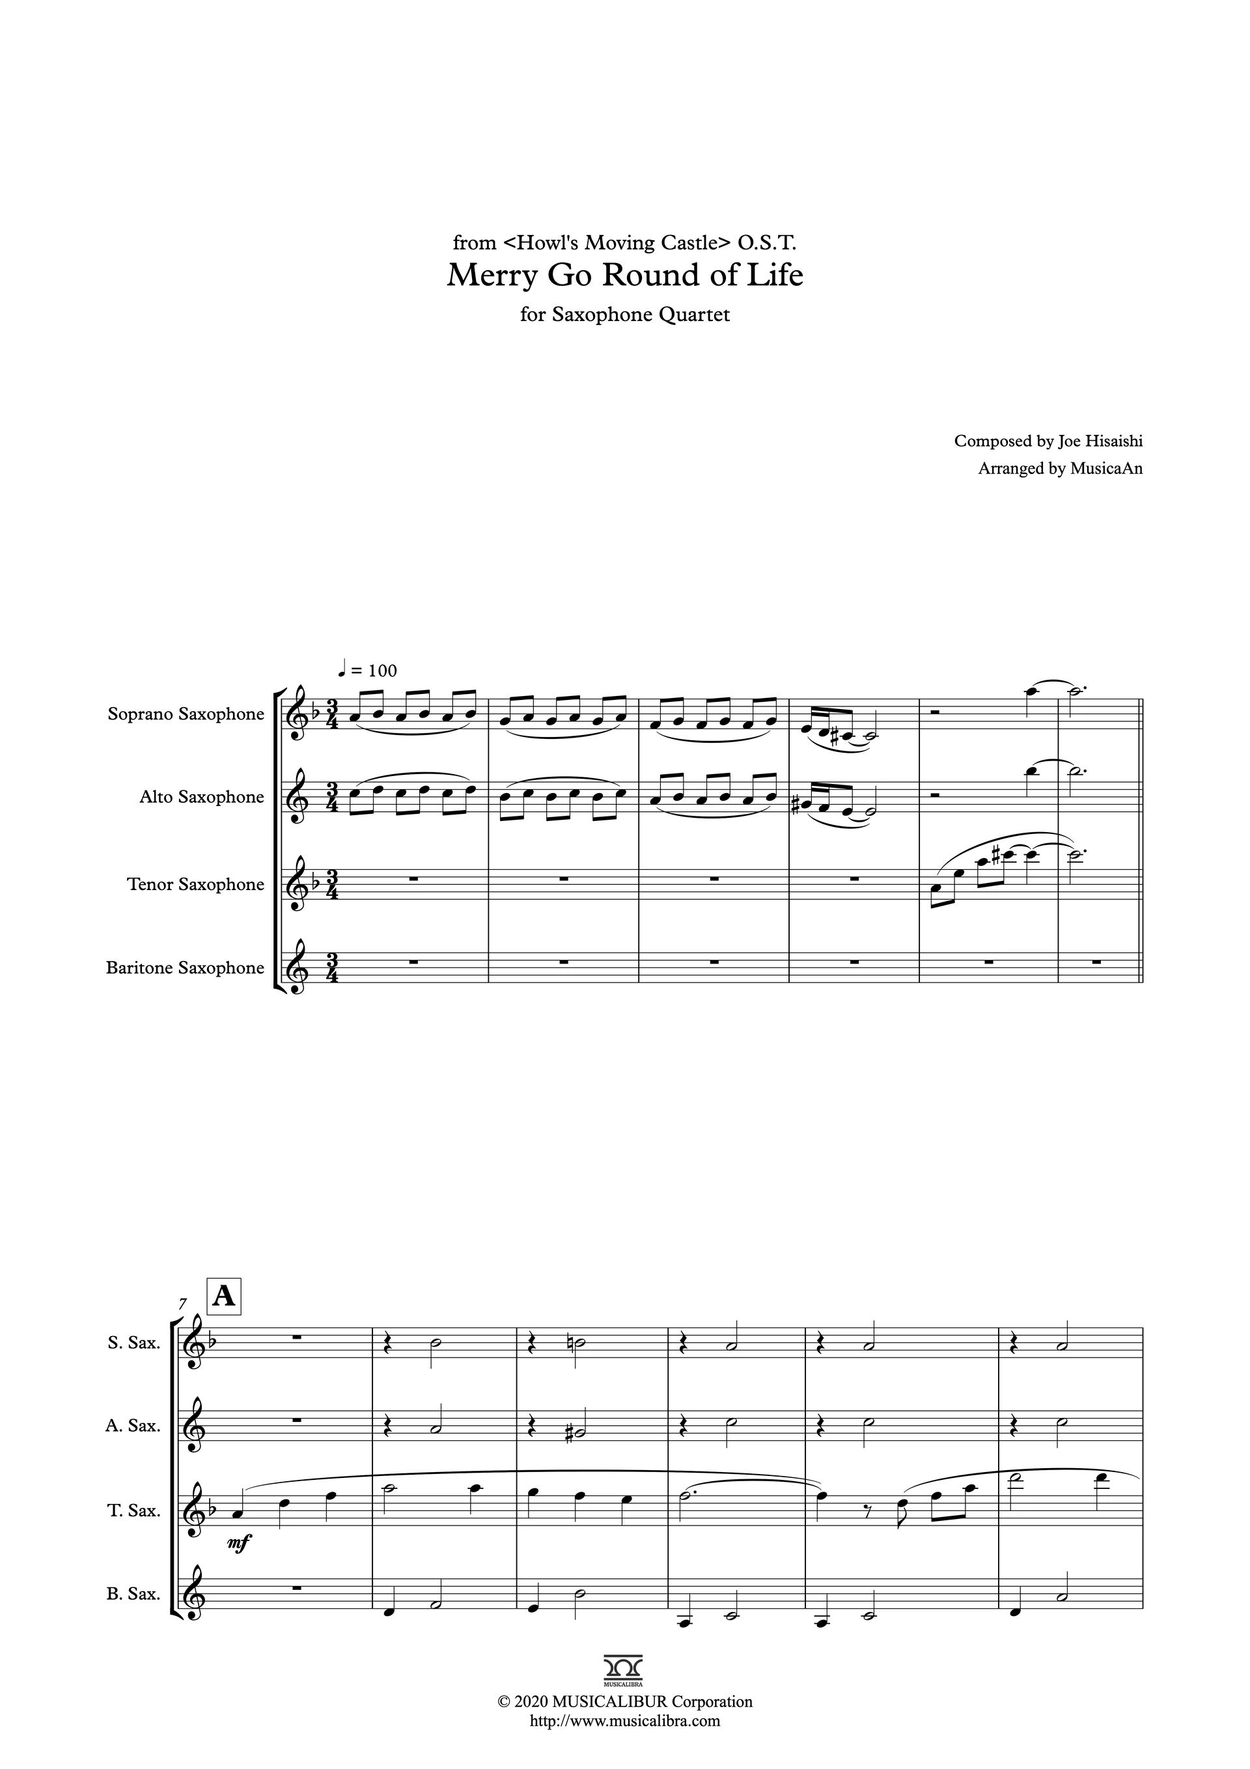 QUARTET SHEET MUSIC] Merry-Go-Round of Life for Saxophone : Musicalibra